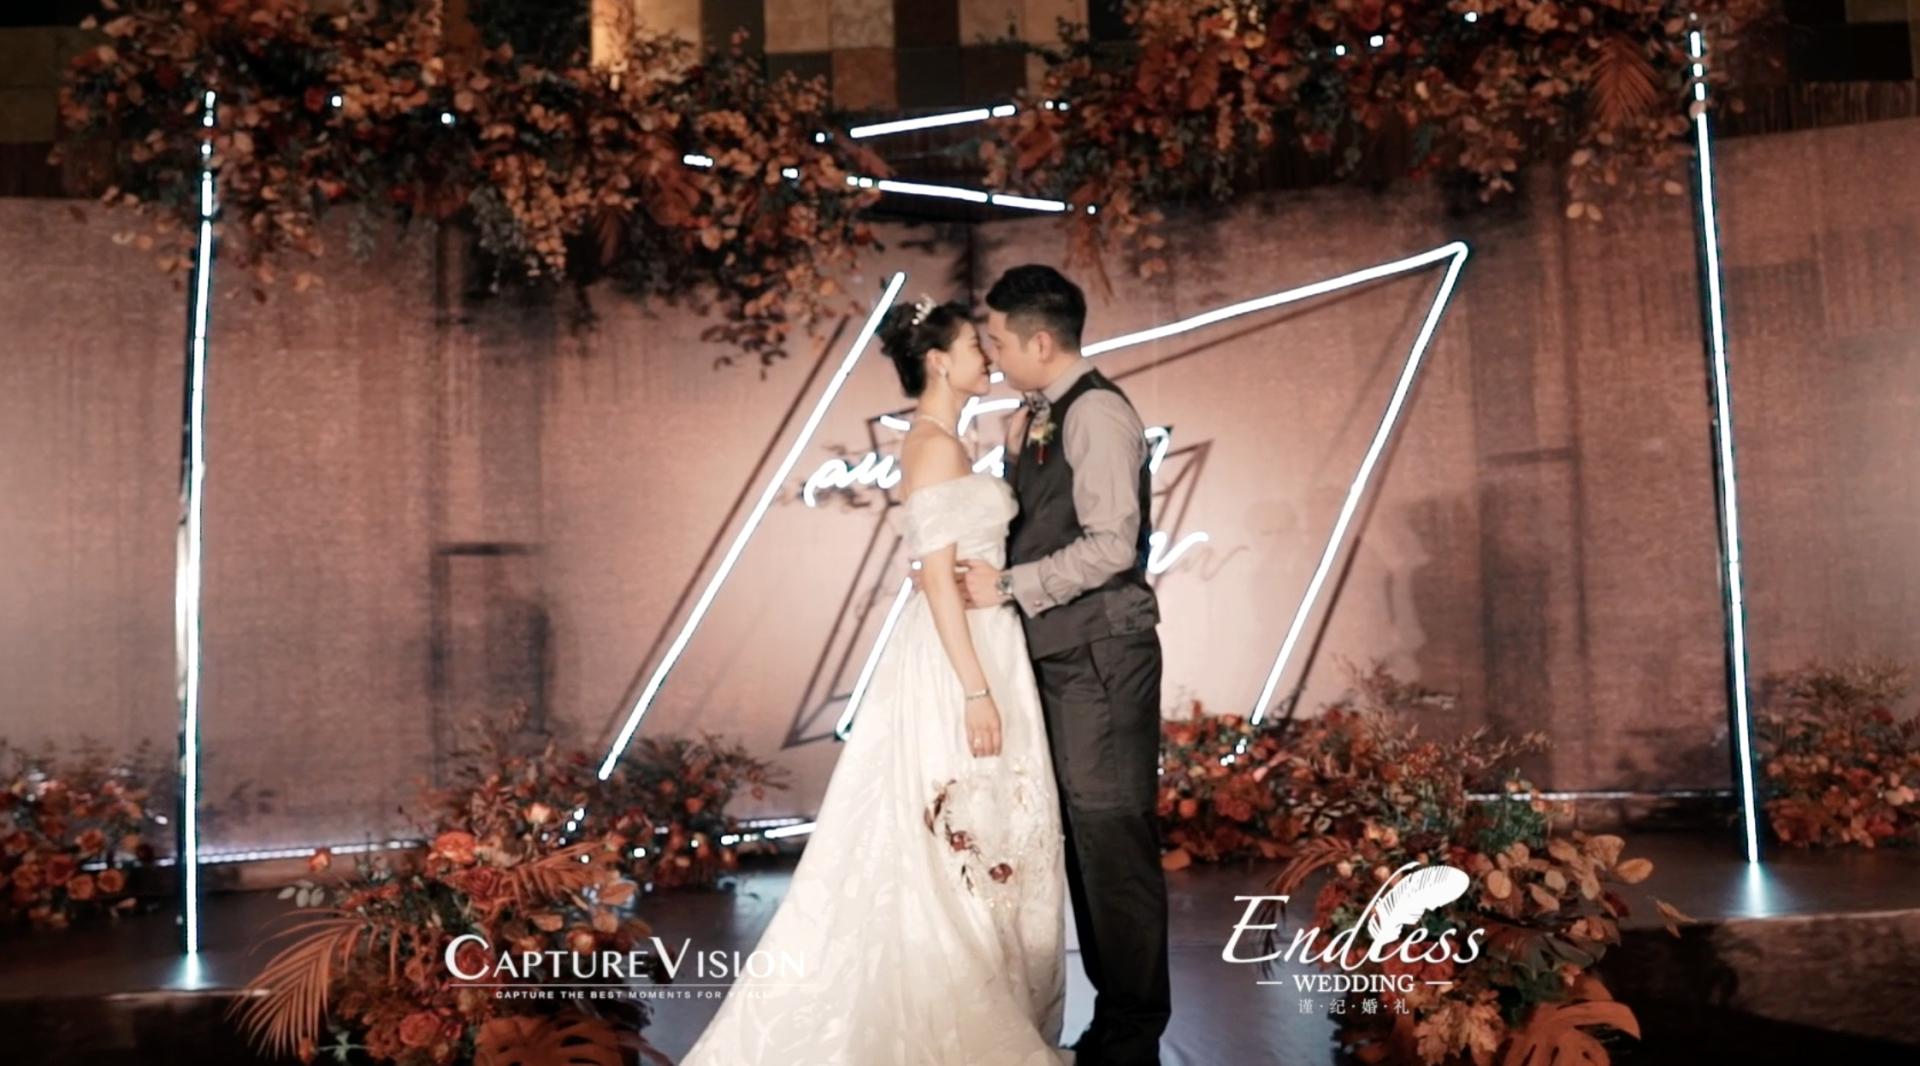 Mar.15th.2019 WeddingSde | CaptureVision婚礼电影